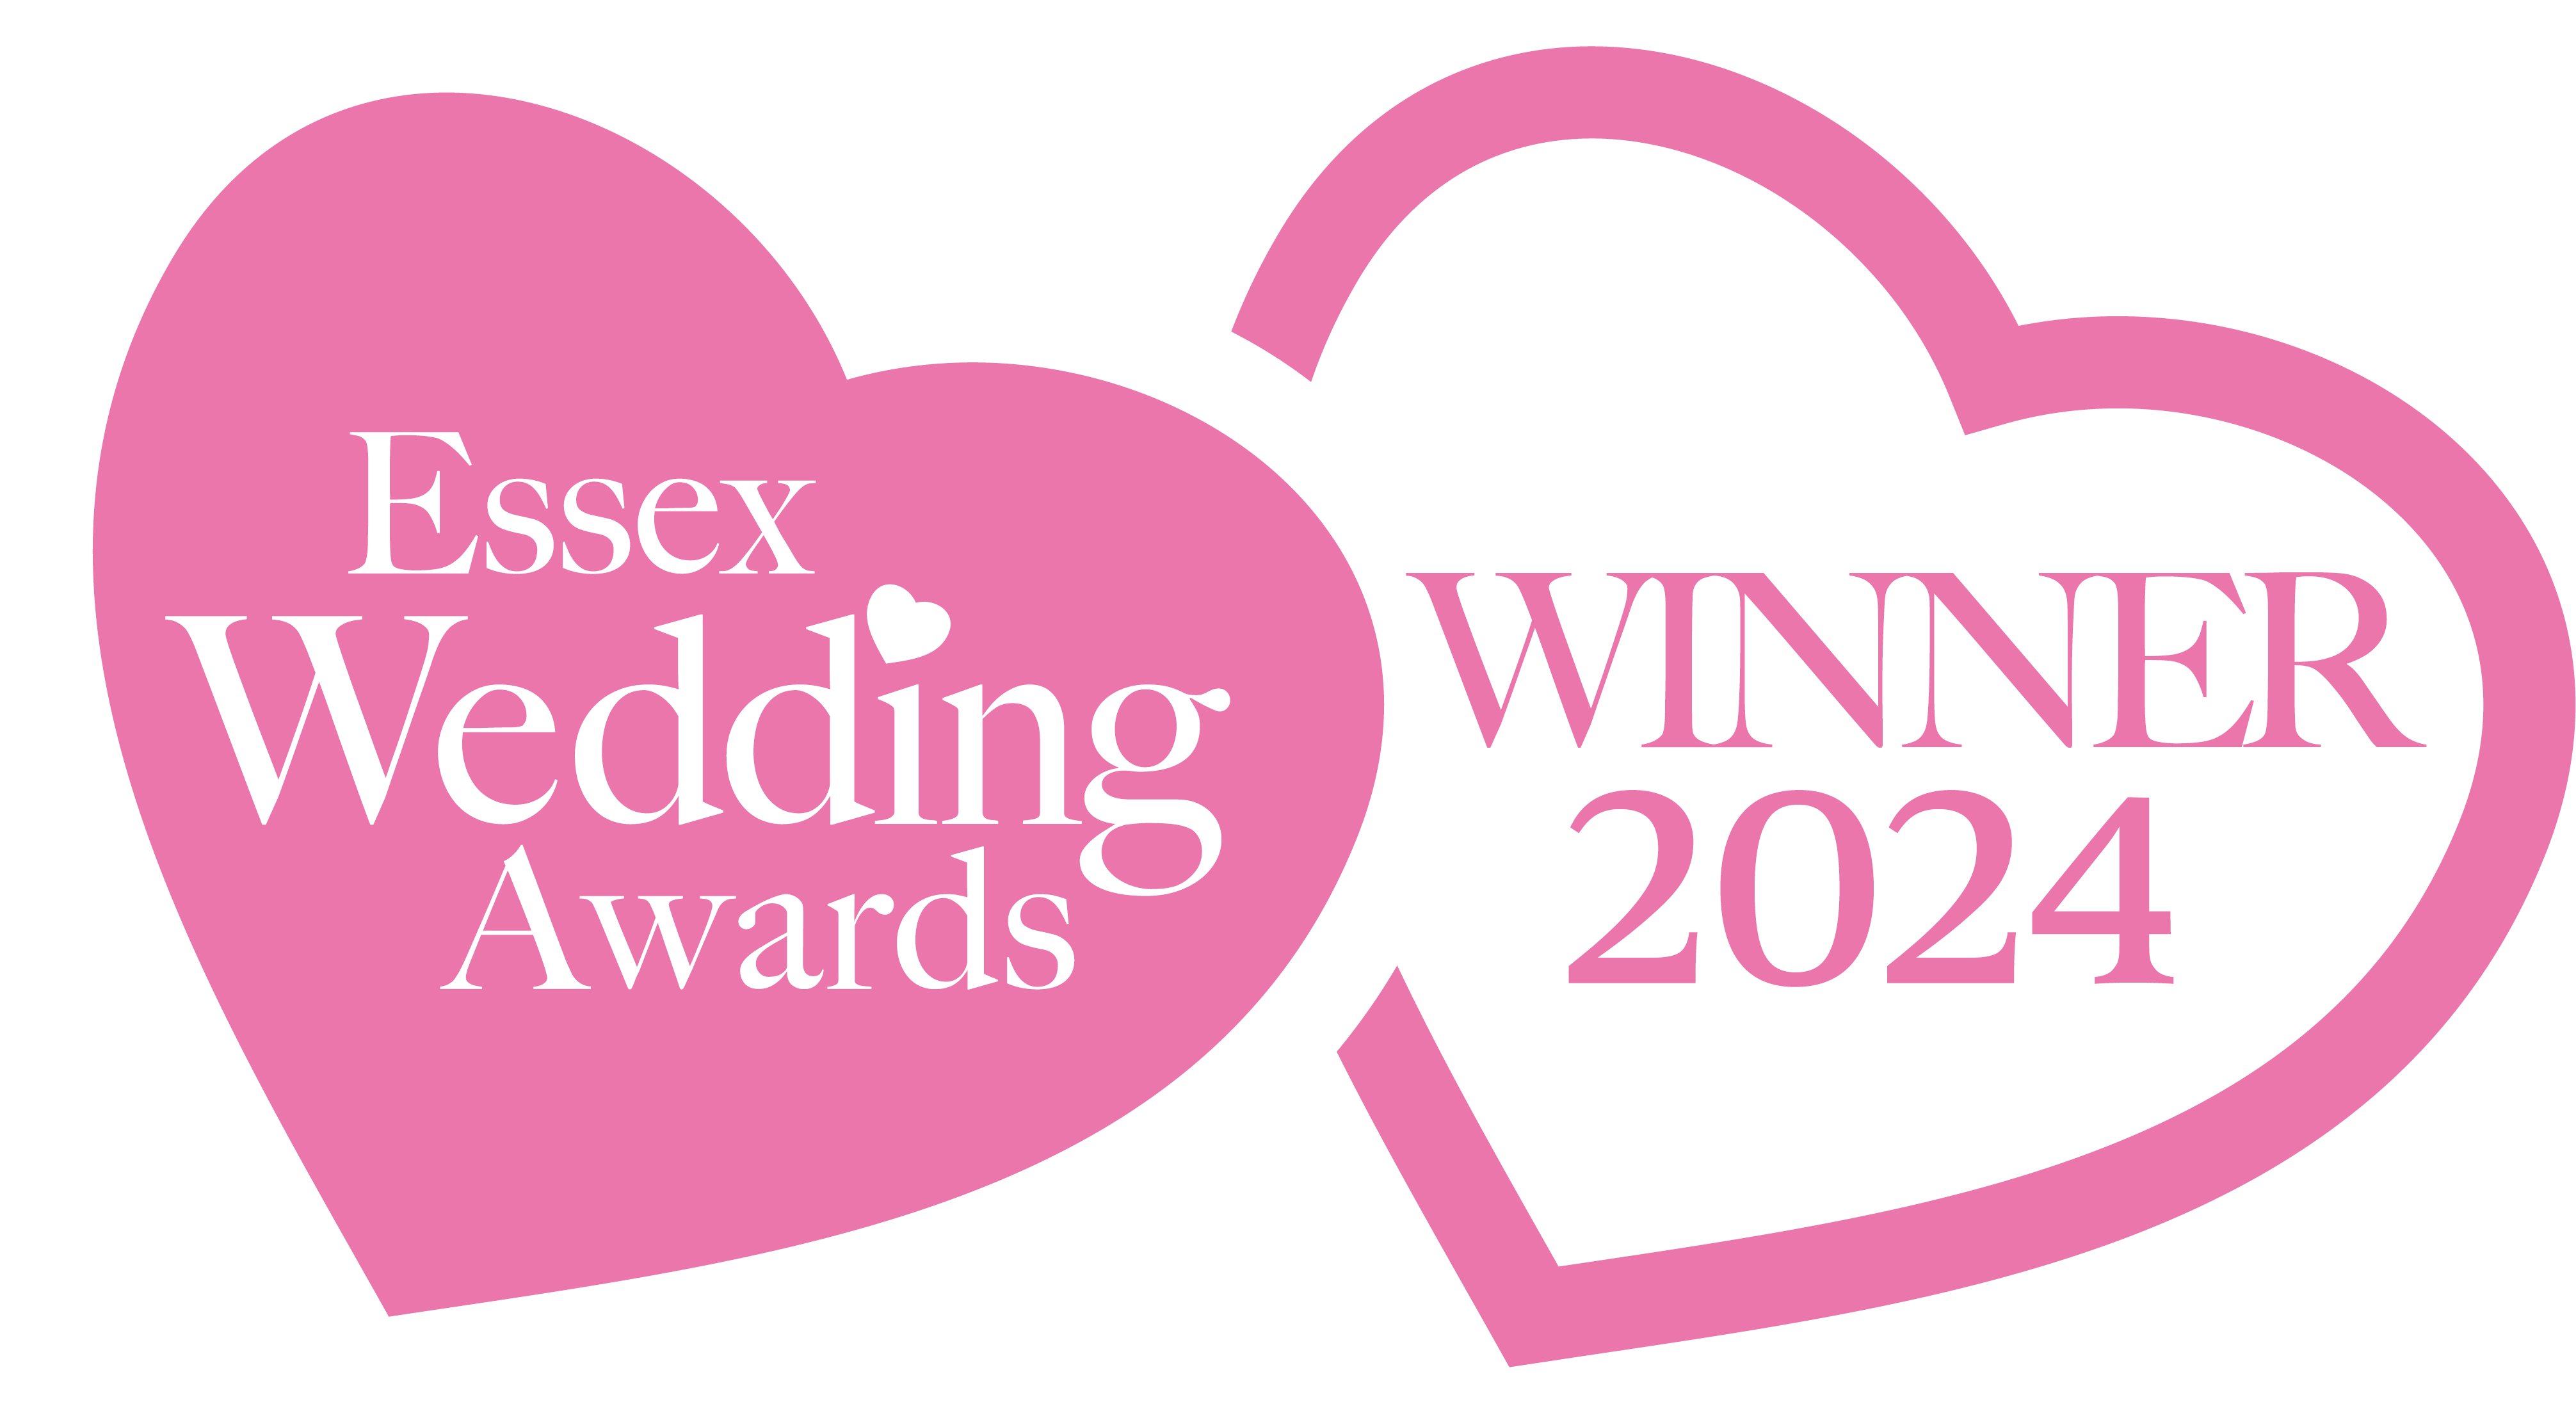 Essex Wedding Awards - Winner 2024